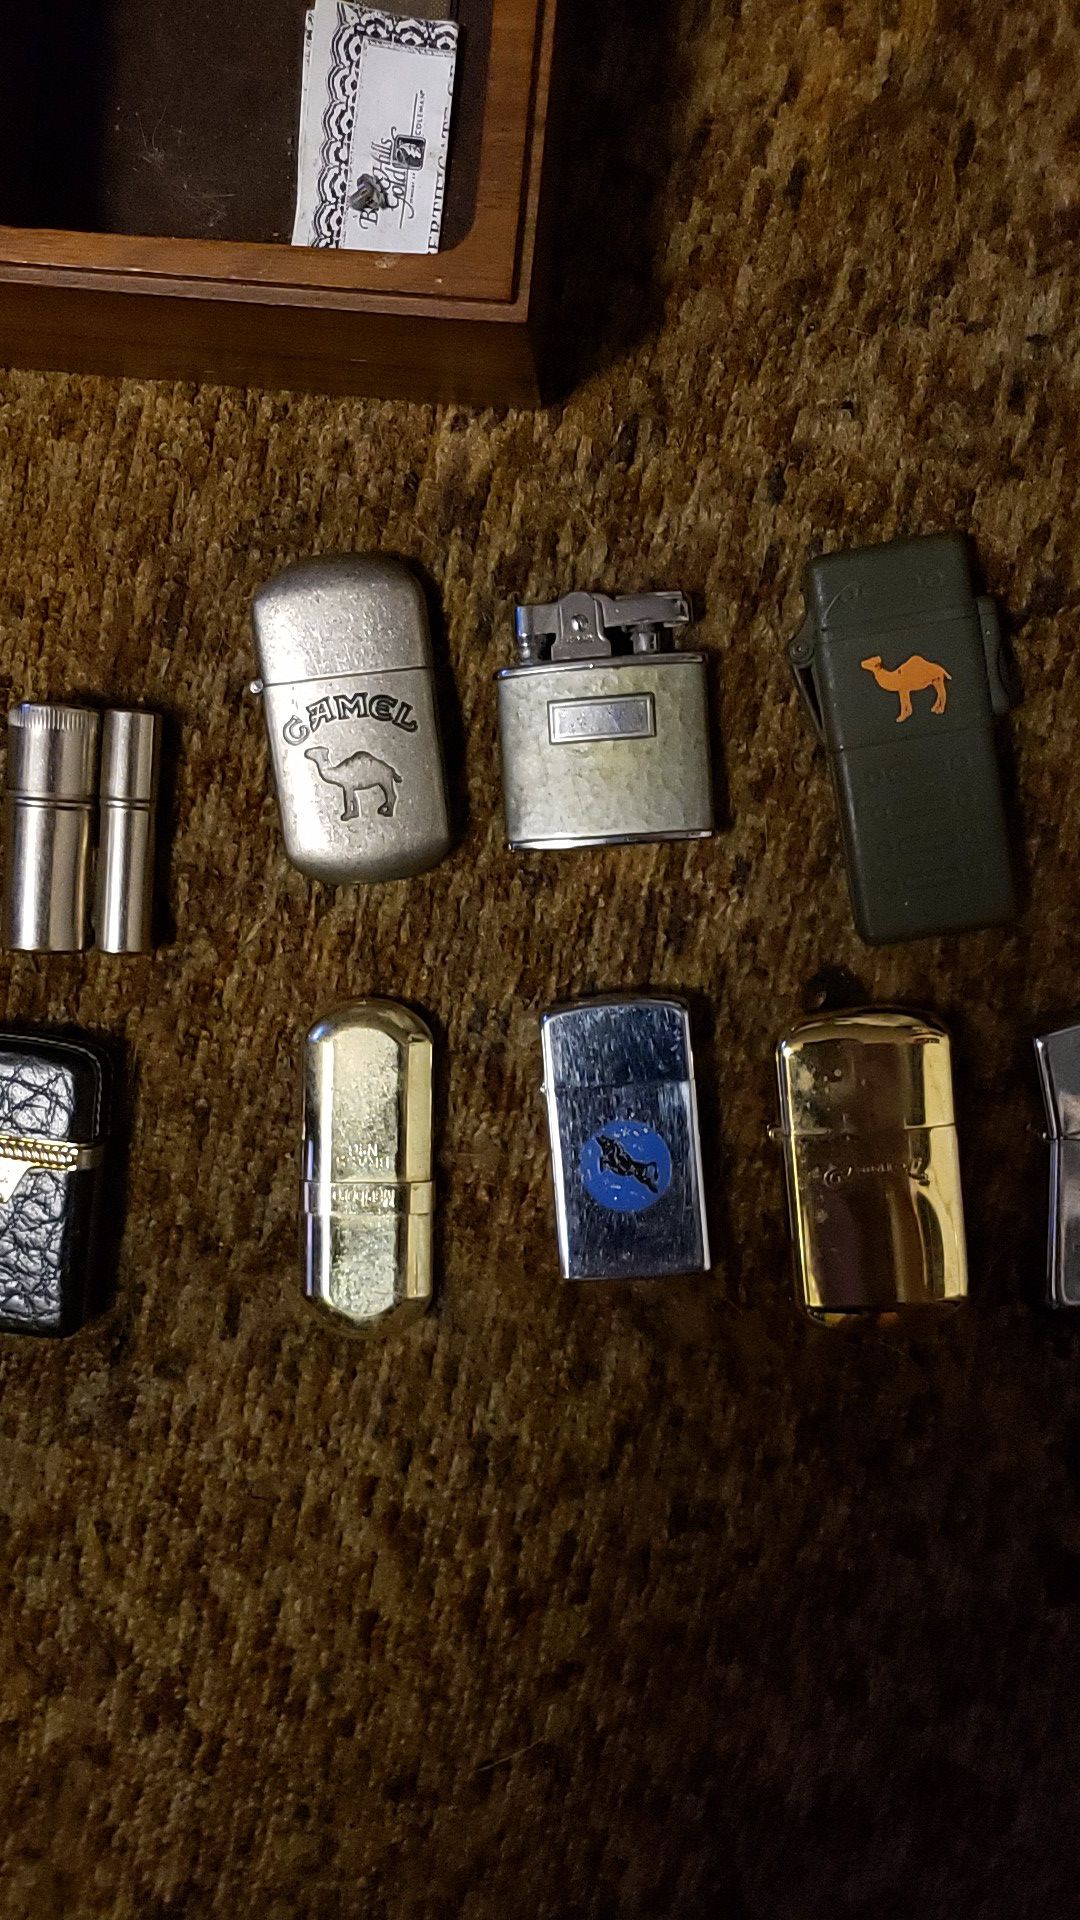 Got a nice zippo lighter collection